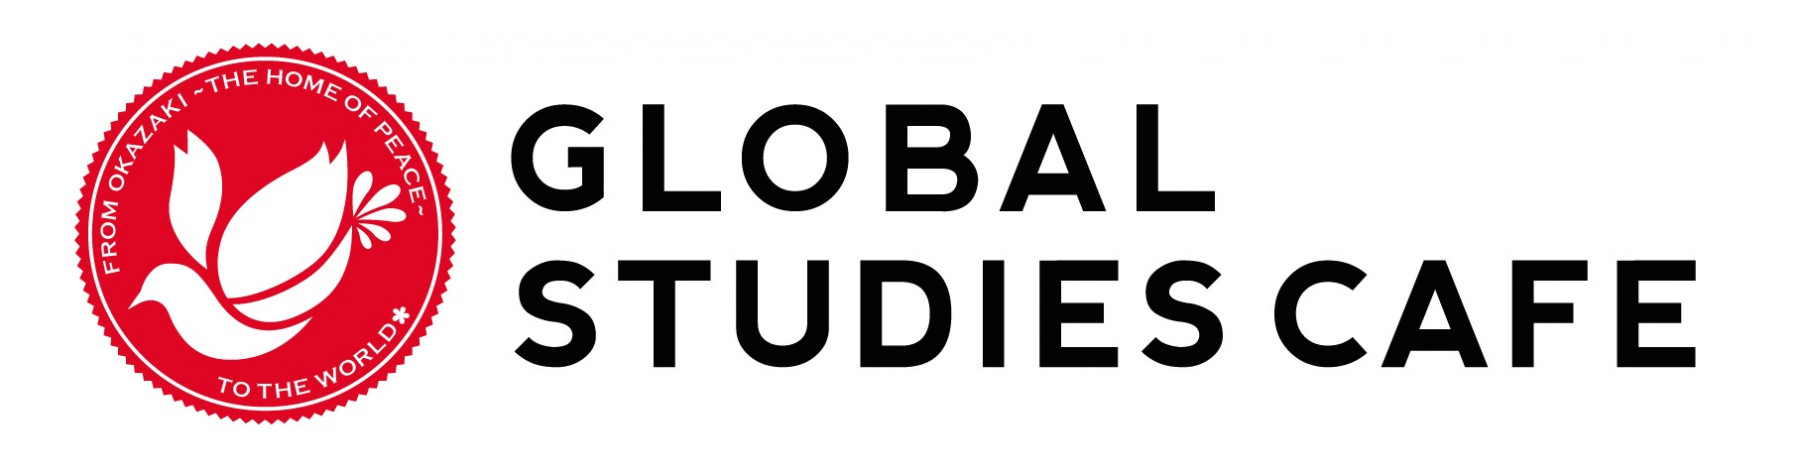 Global Studies Cafe 